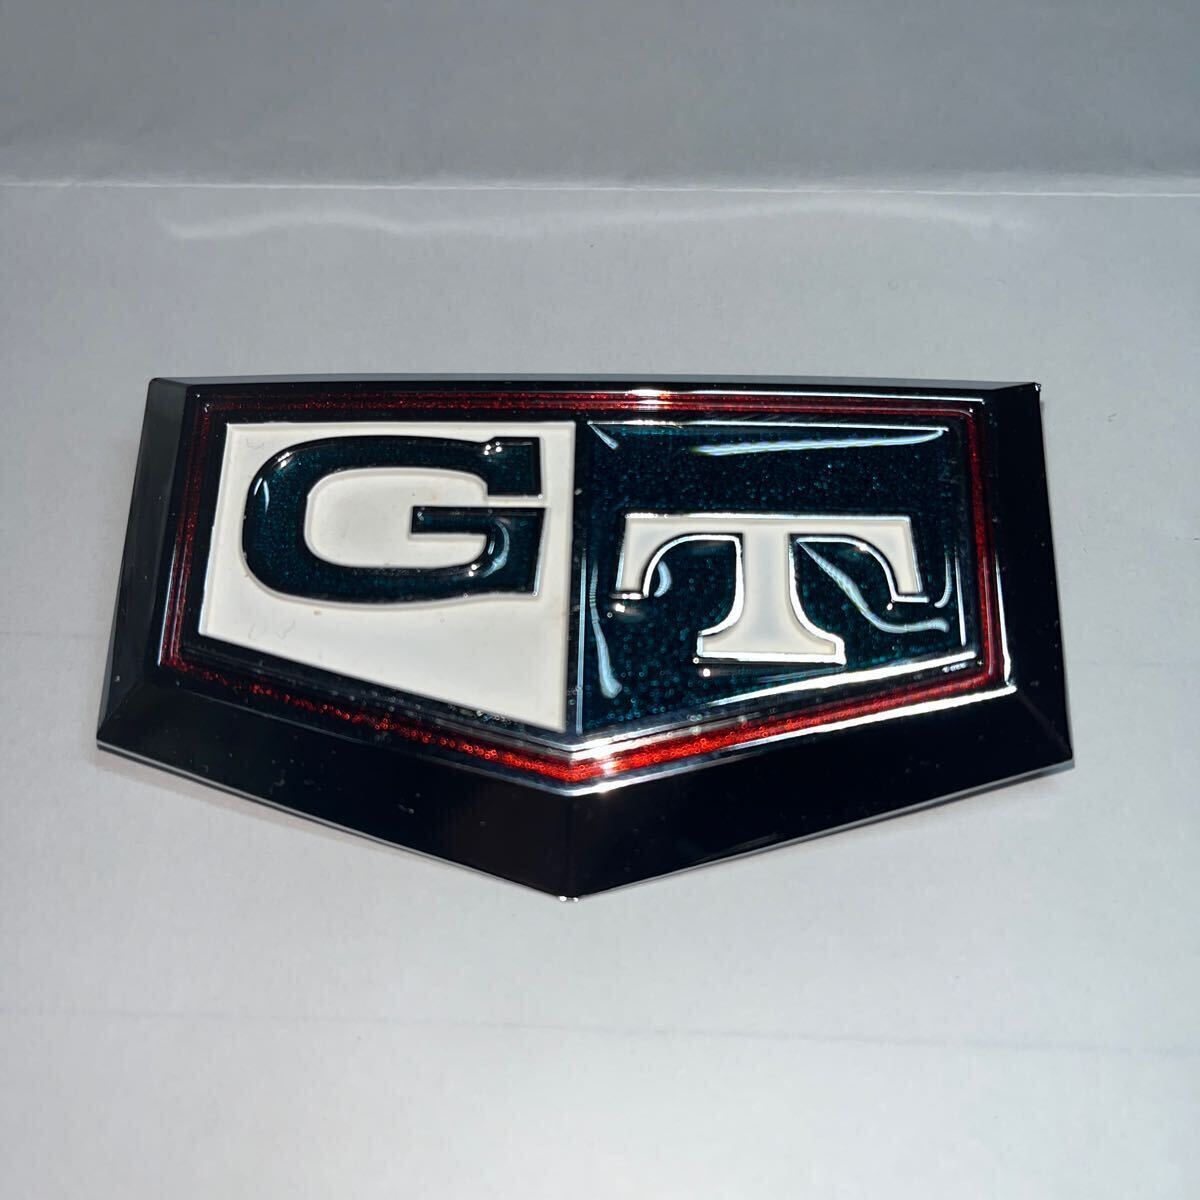  Skyline Ken&Mary original GT emblem 